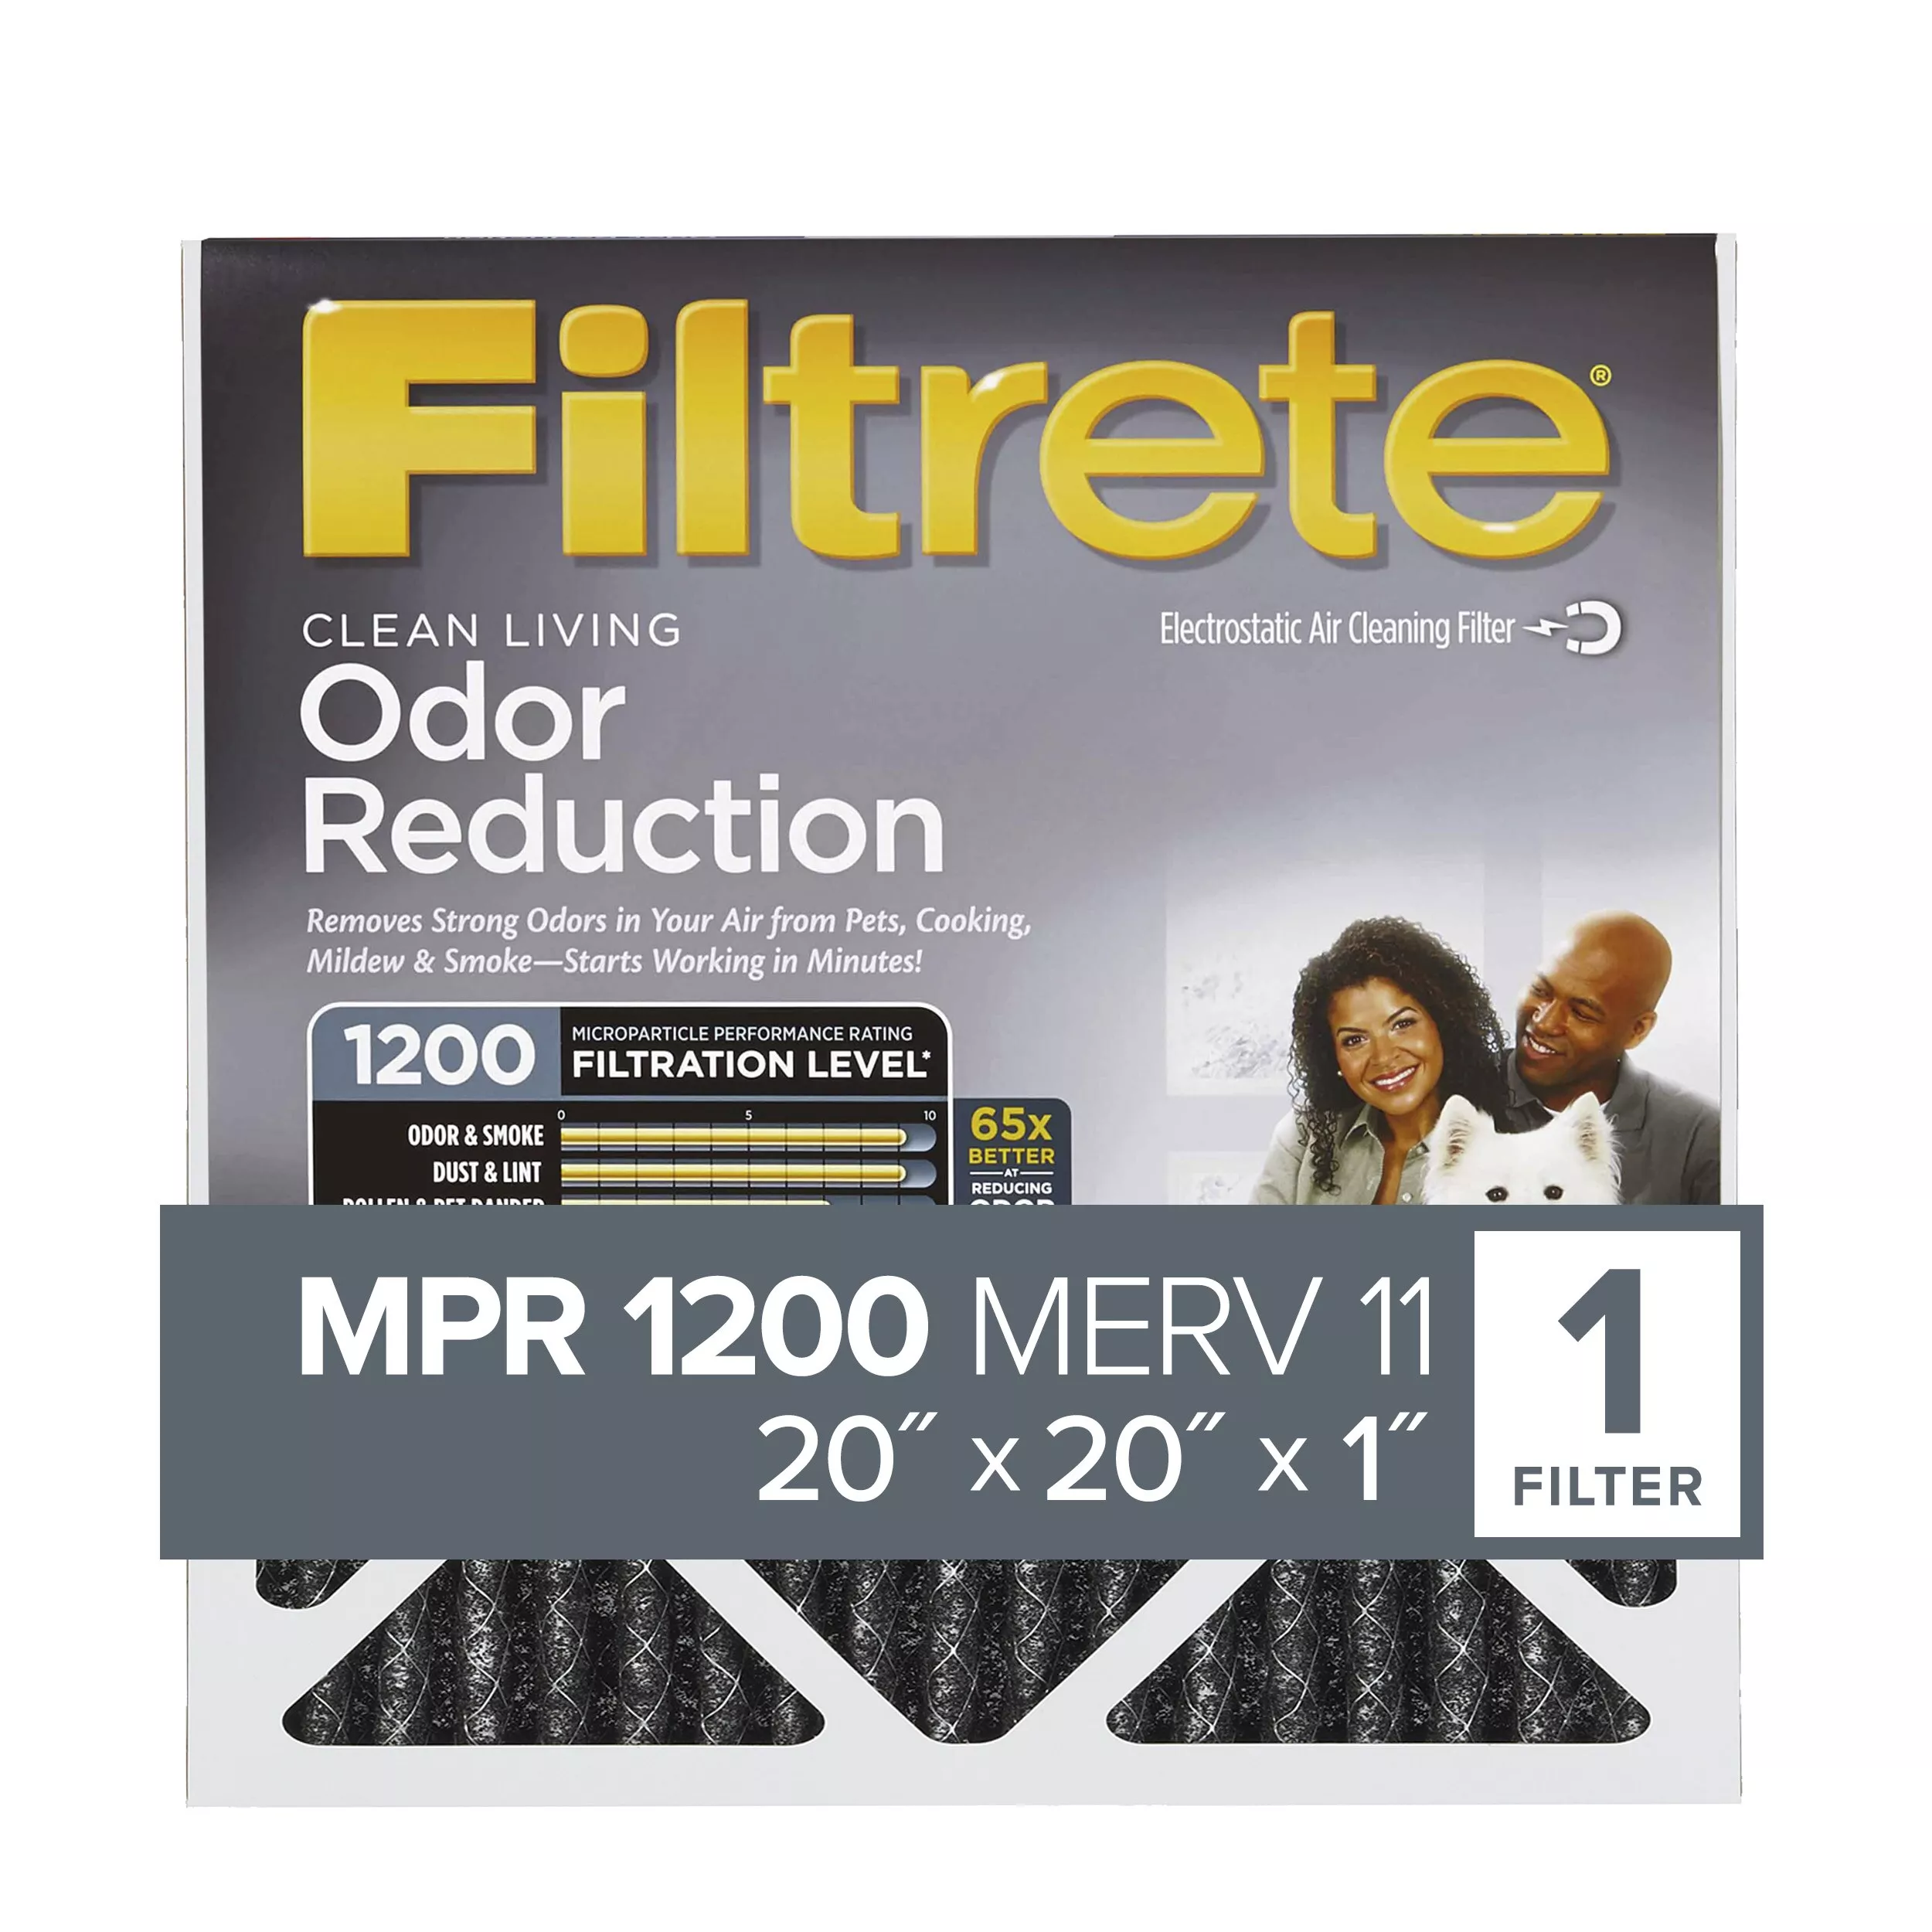 Filtrete™ Home Odor Reduction Filter HOME02-4, 20 in x 20 in x 1 in
(50,8 cm x 50,8 cm x 2,5 cm)